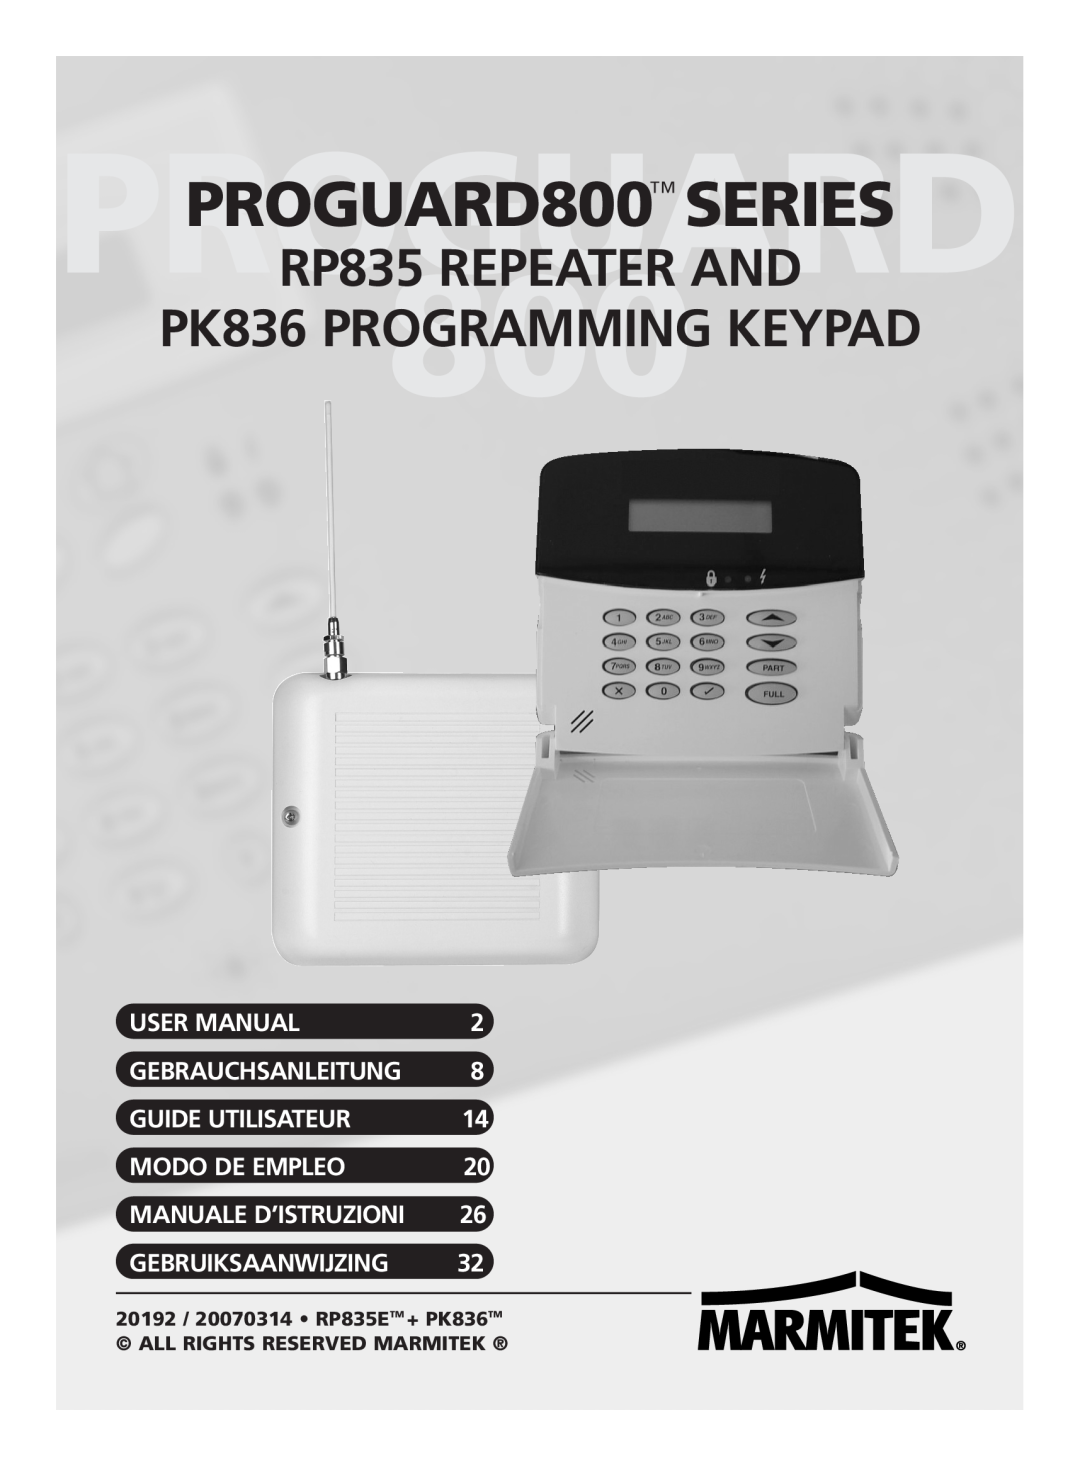 Marmitek user manual RP835 REPEATER AND, PK836 PROGRAMMING800 KEYPAD, Guide Utilisateur, Modo De Empleo 